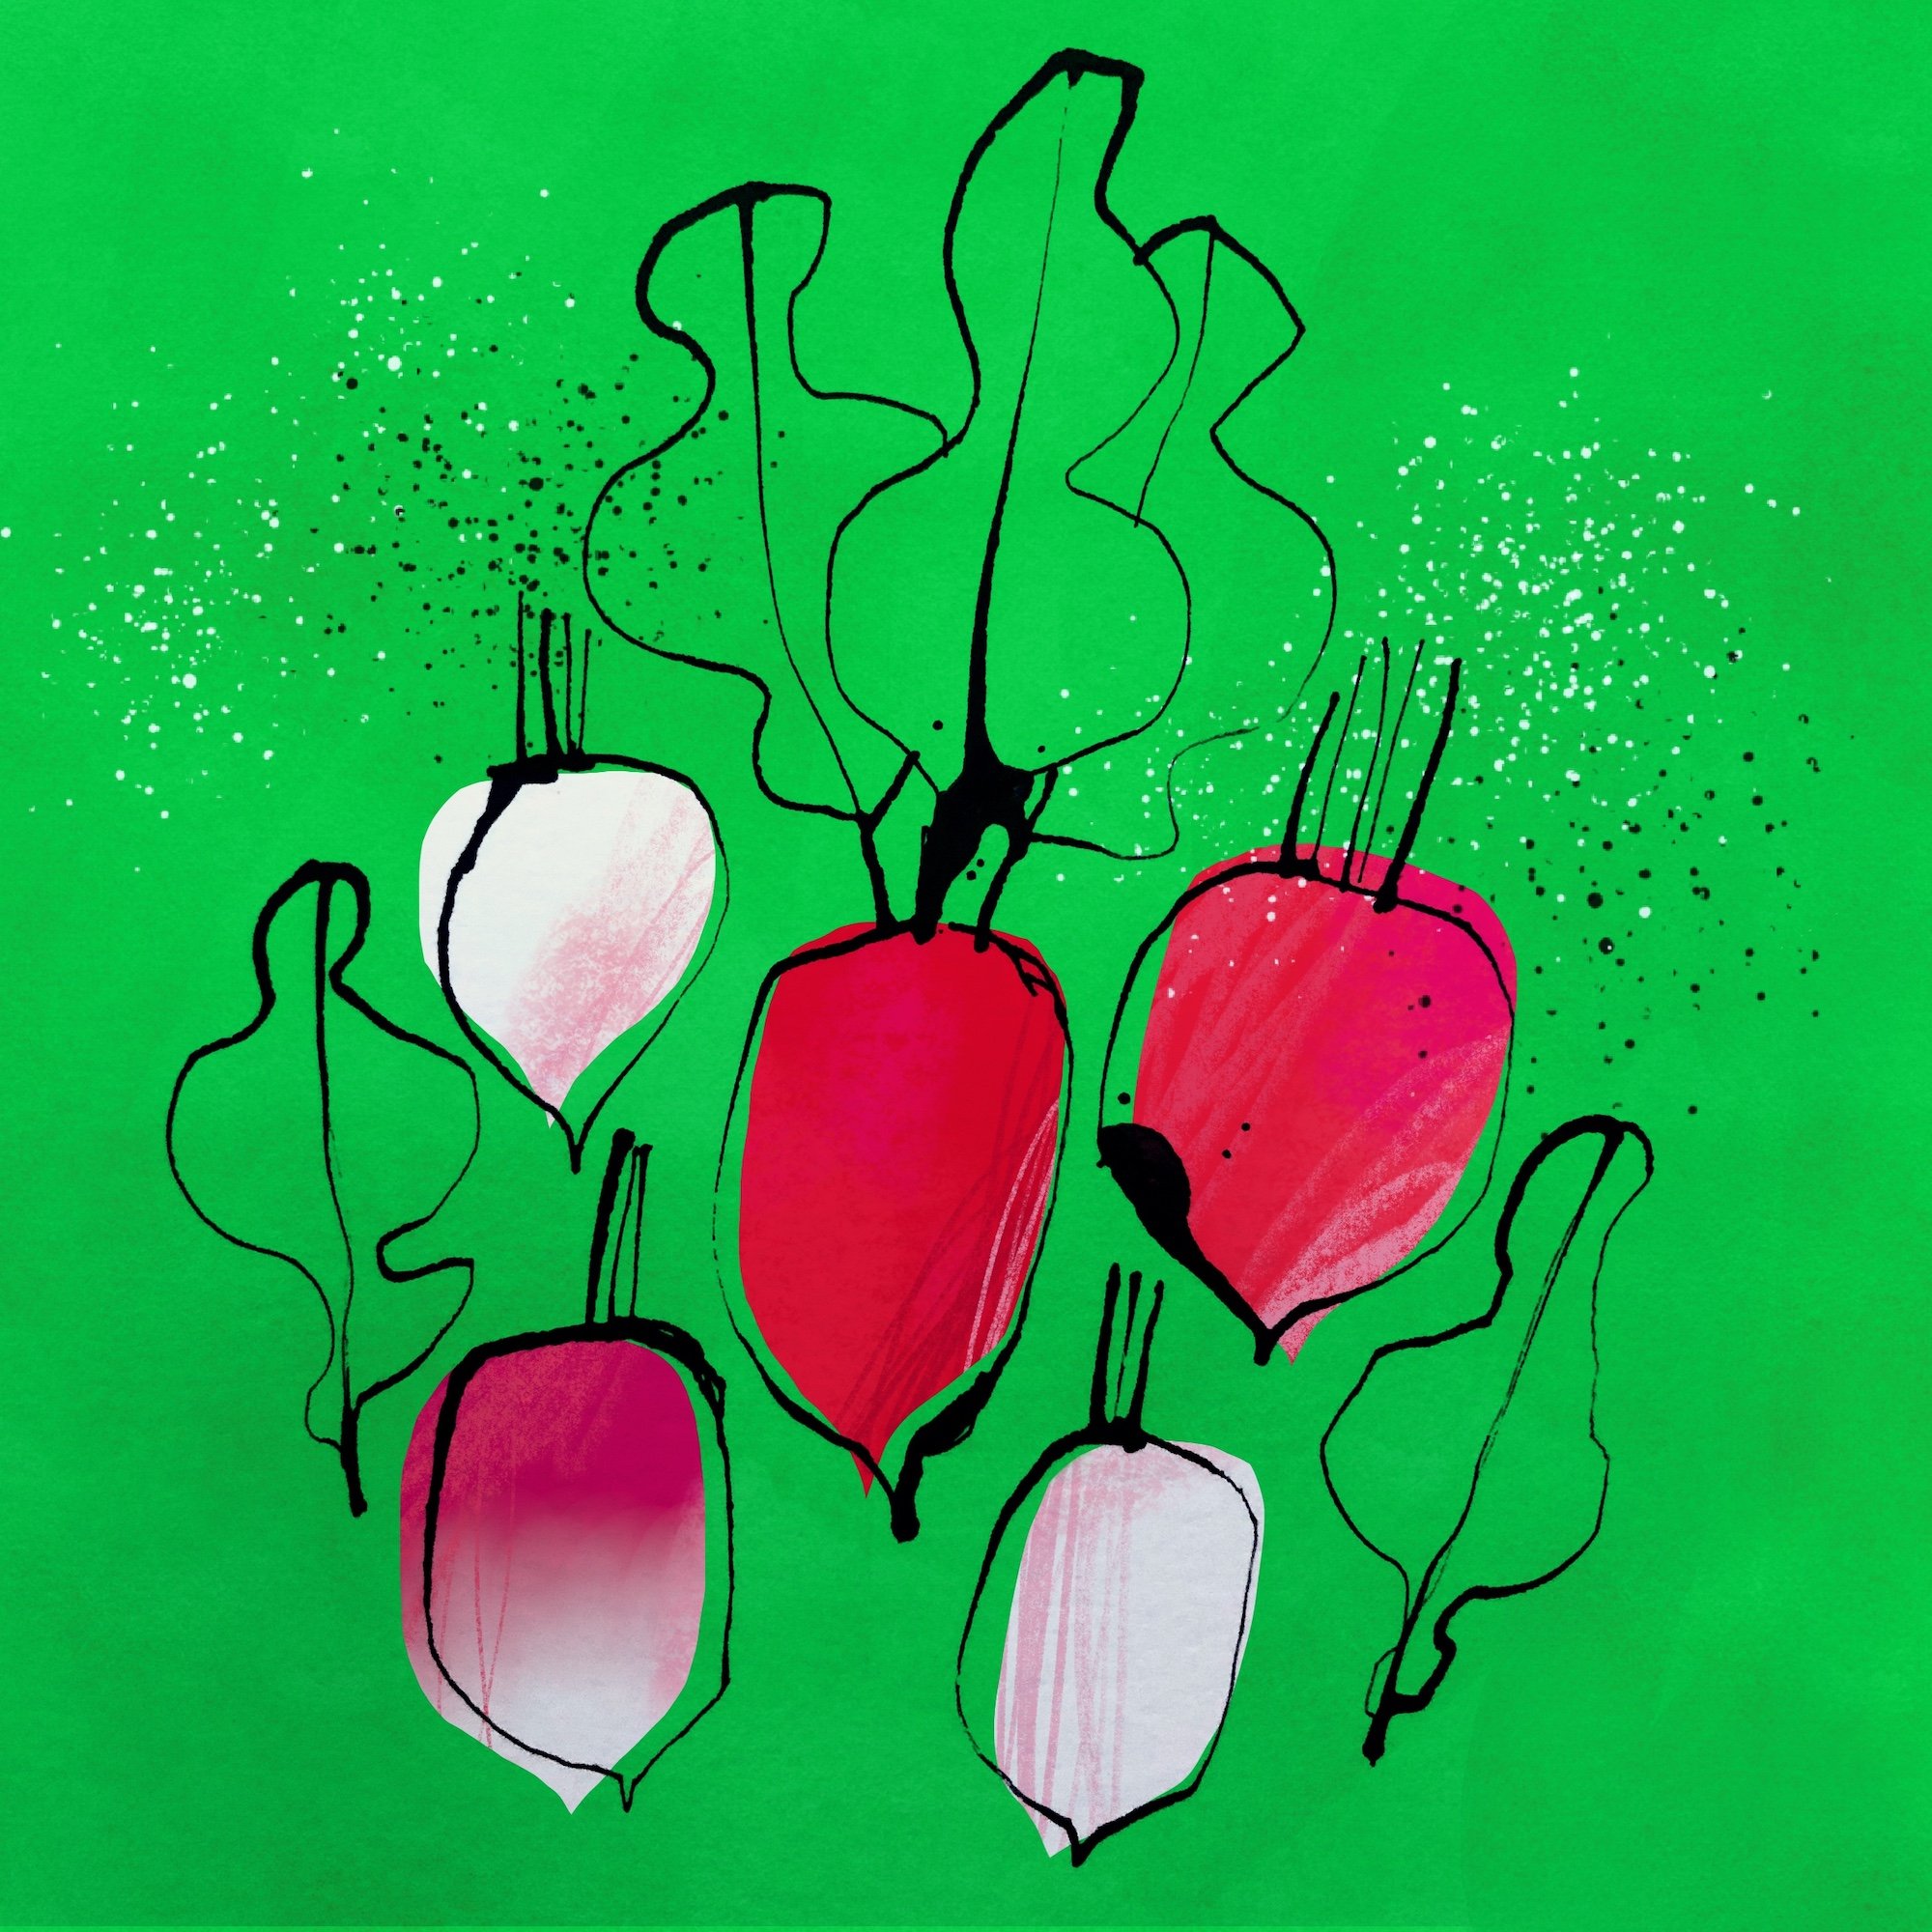 Illustrated radishes 